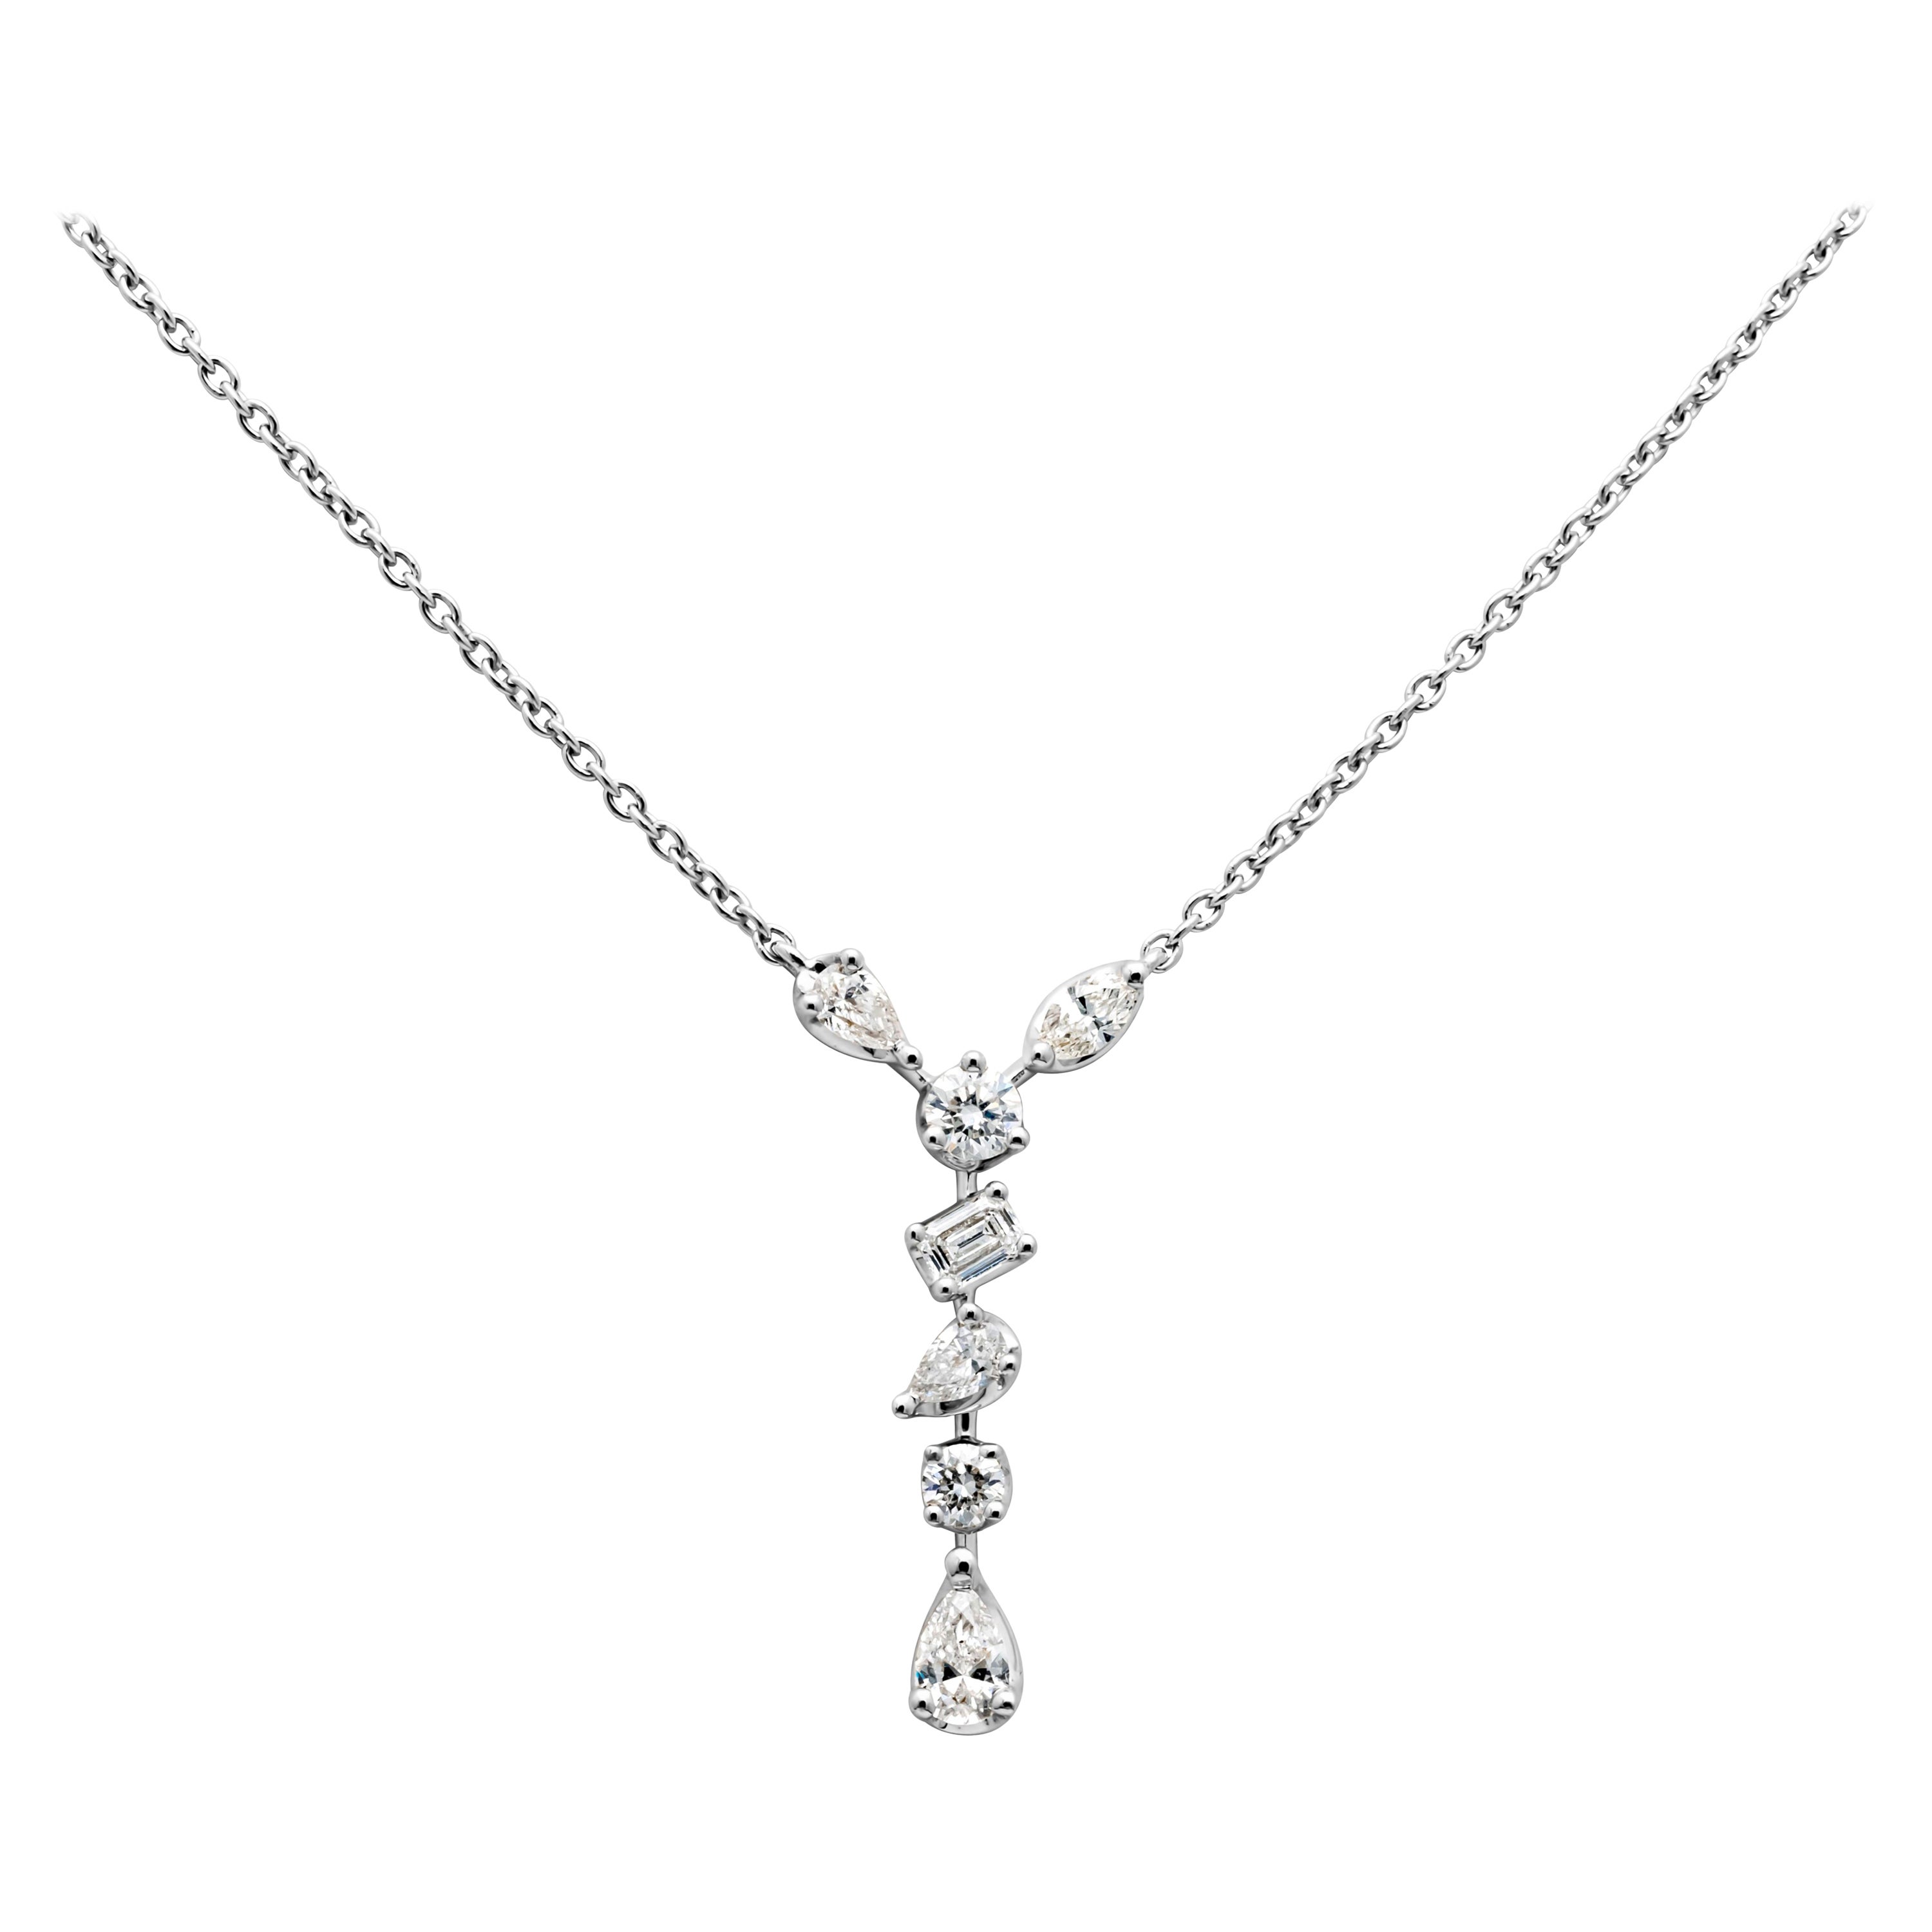 Roman Malakov 1.35 Carats Total Multi-Shape Diamond Drop Pendant Necklace